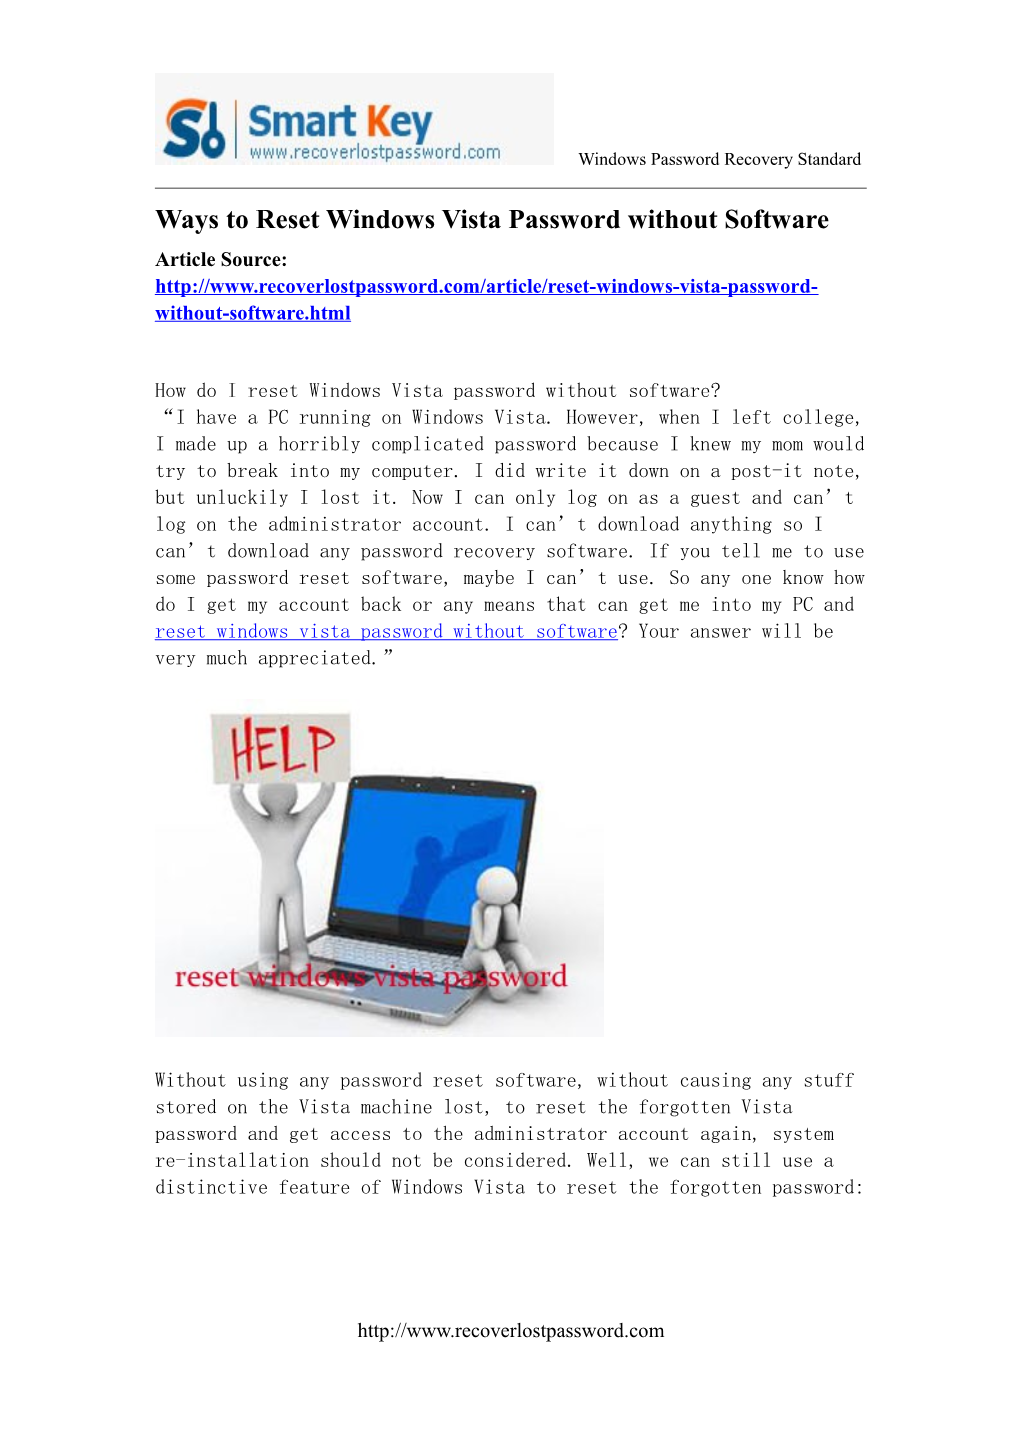 Ways to Reset Windows Vista Password Without Software